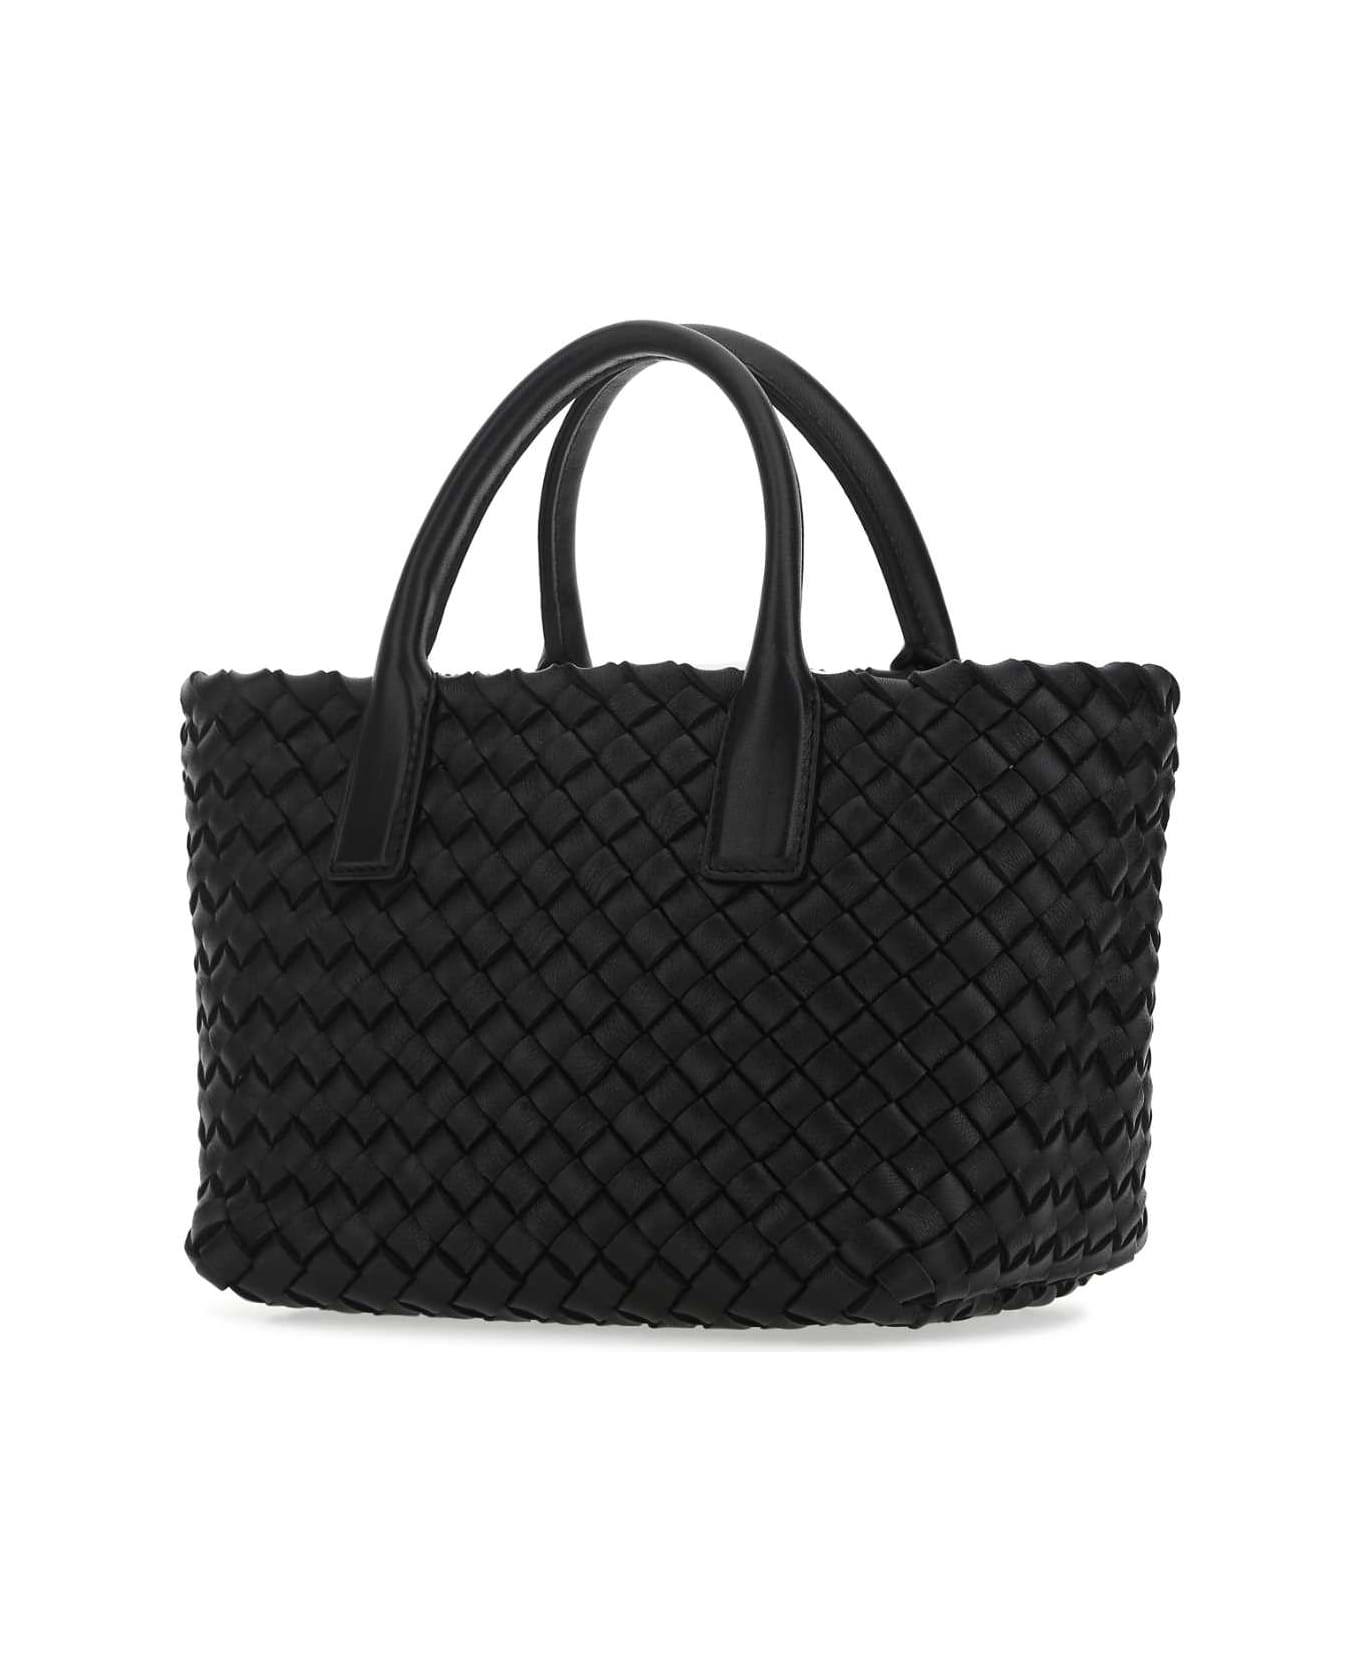 Bottega Veneta Black Leather Mini Cabat Handbag - 8425